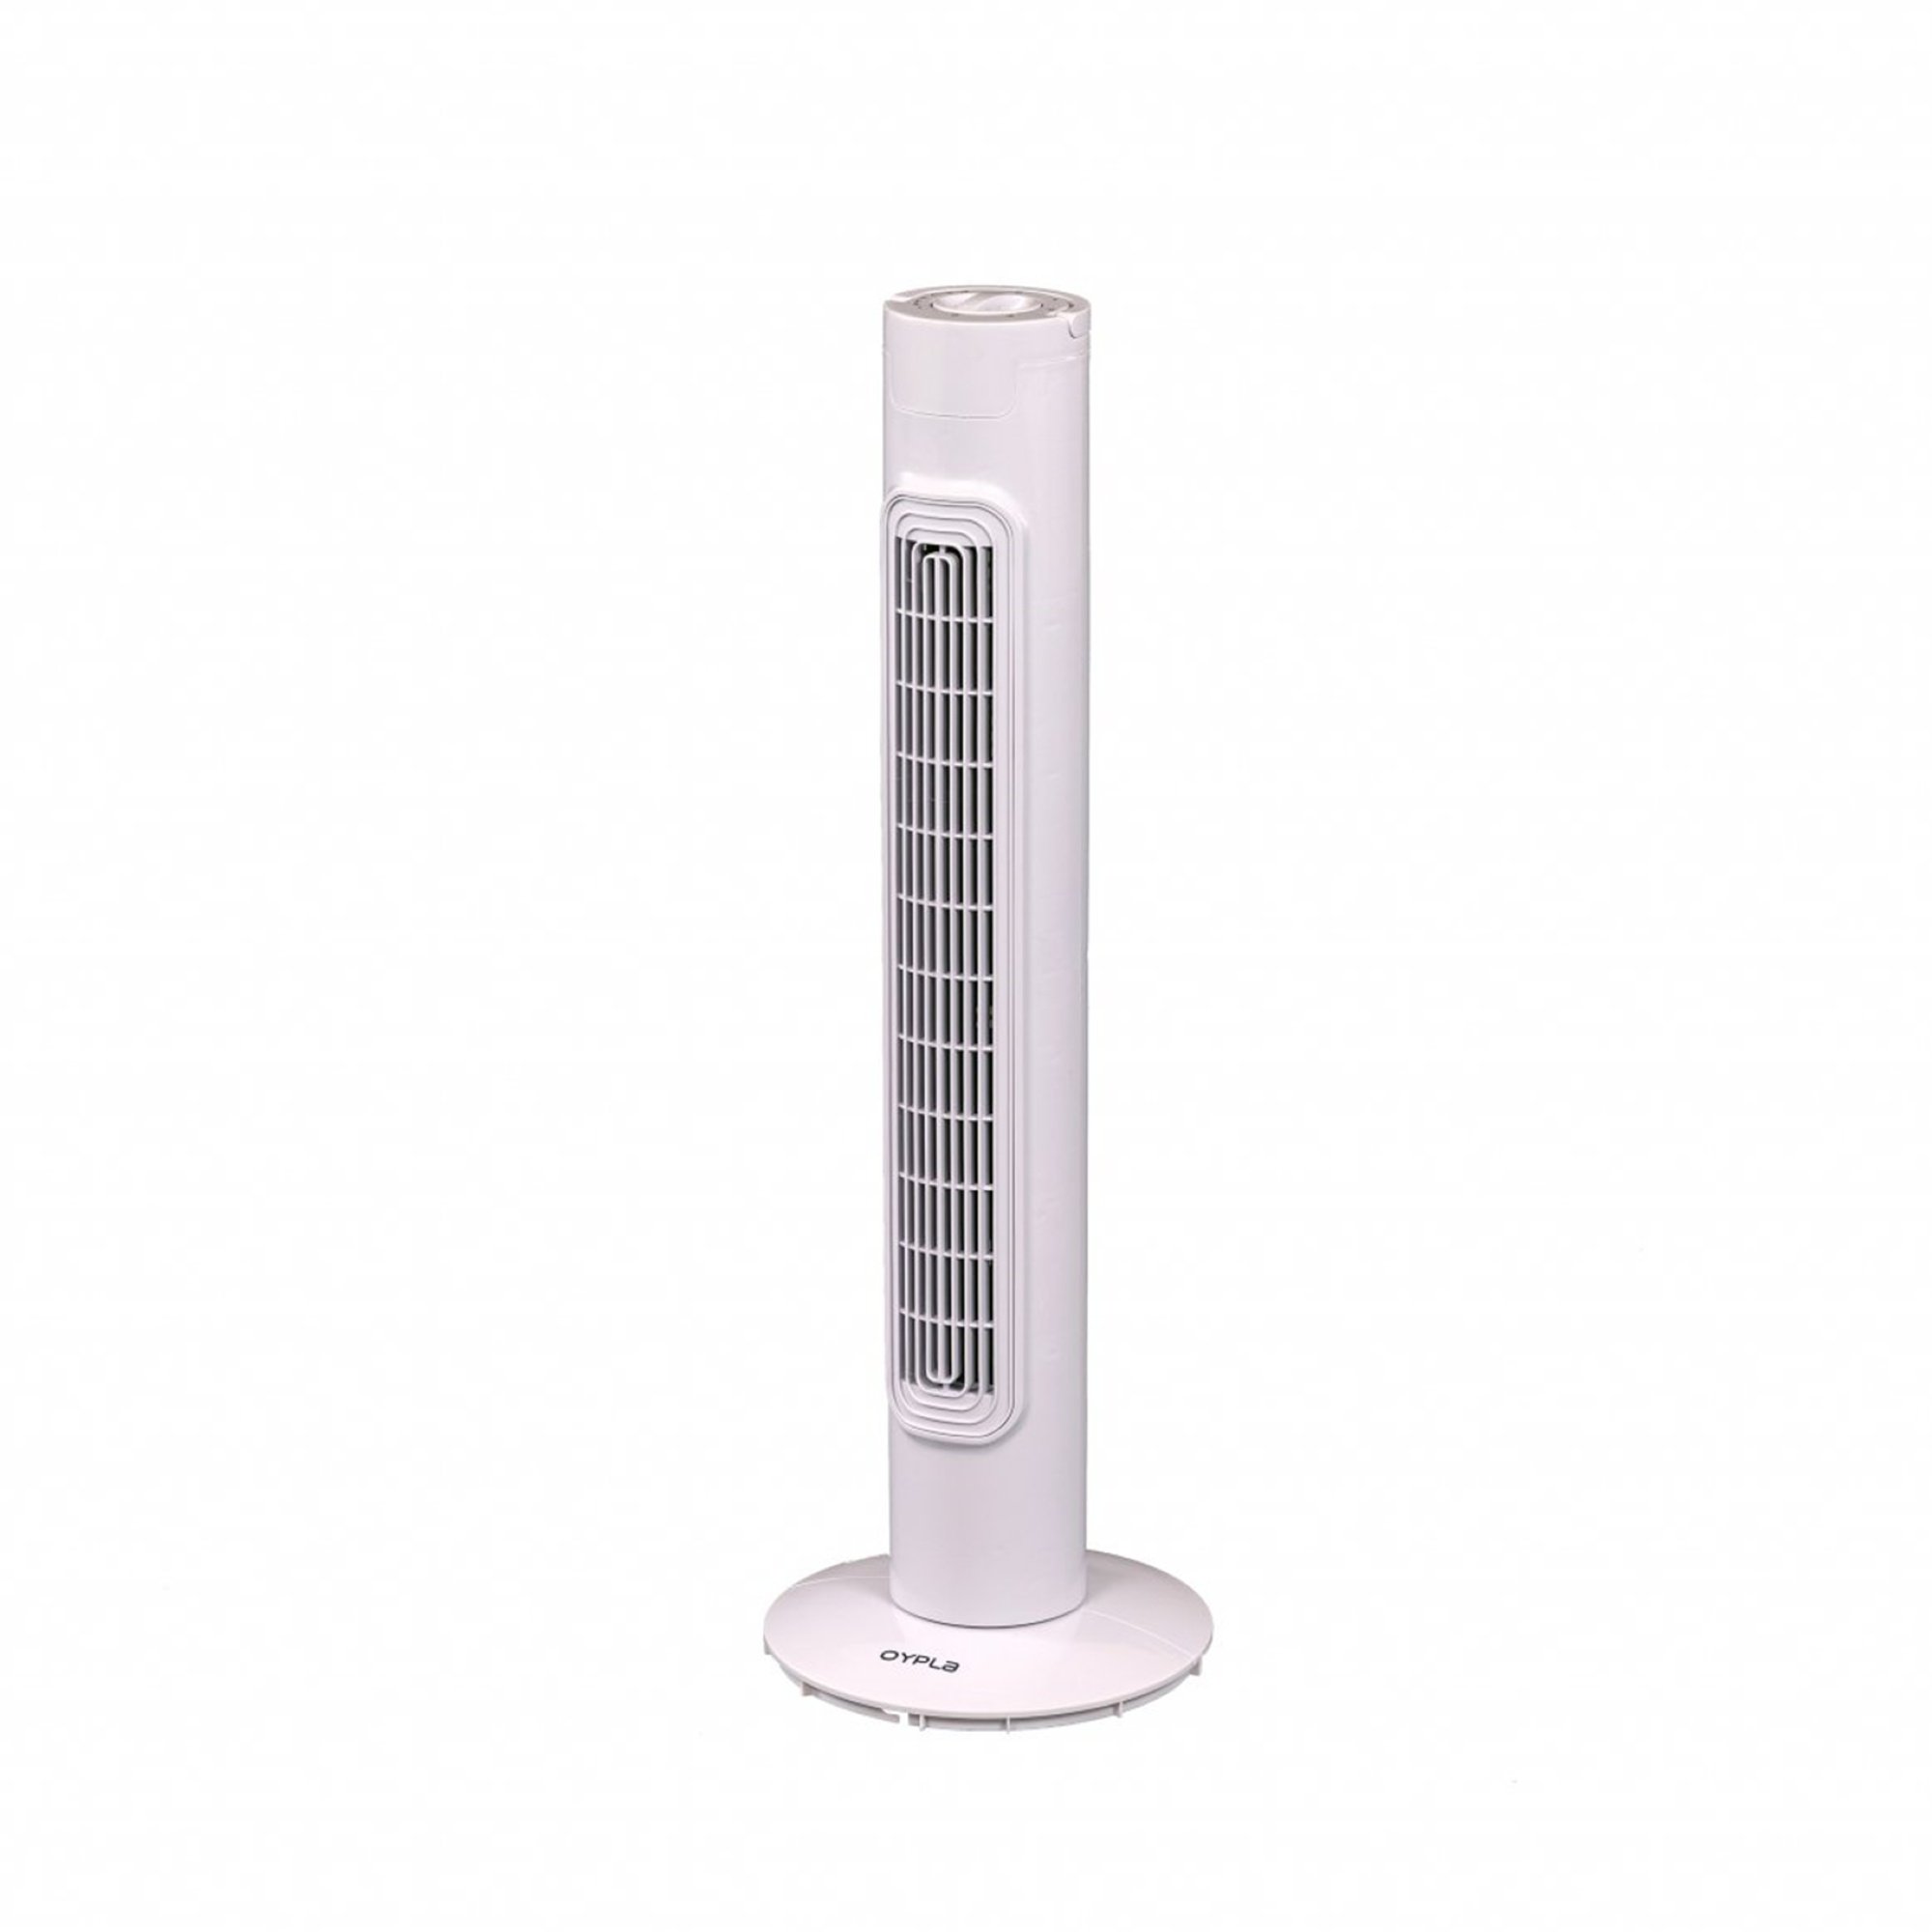 30 Oscillating Tower Fan, Home Cooler